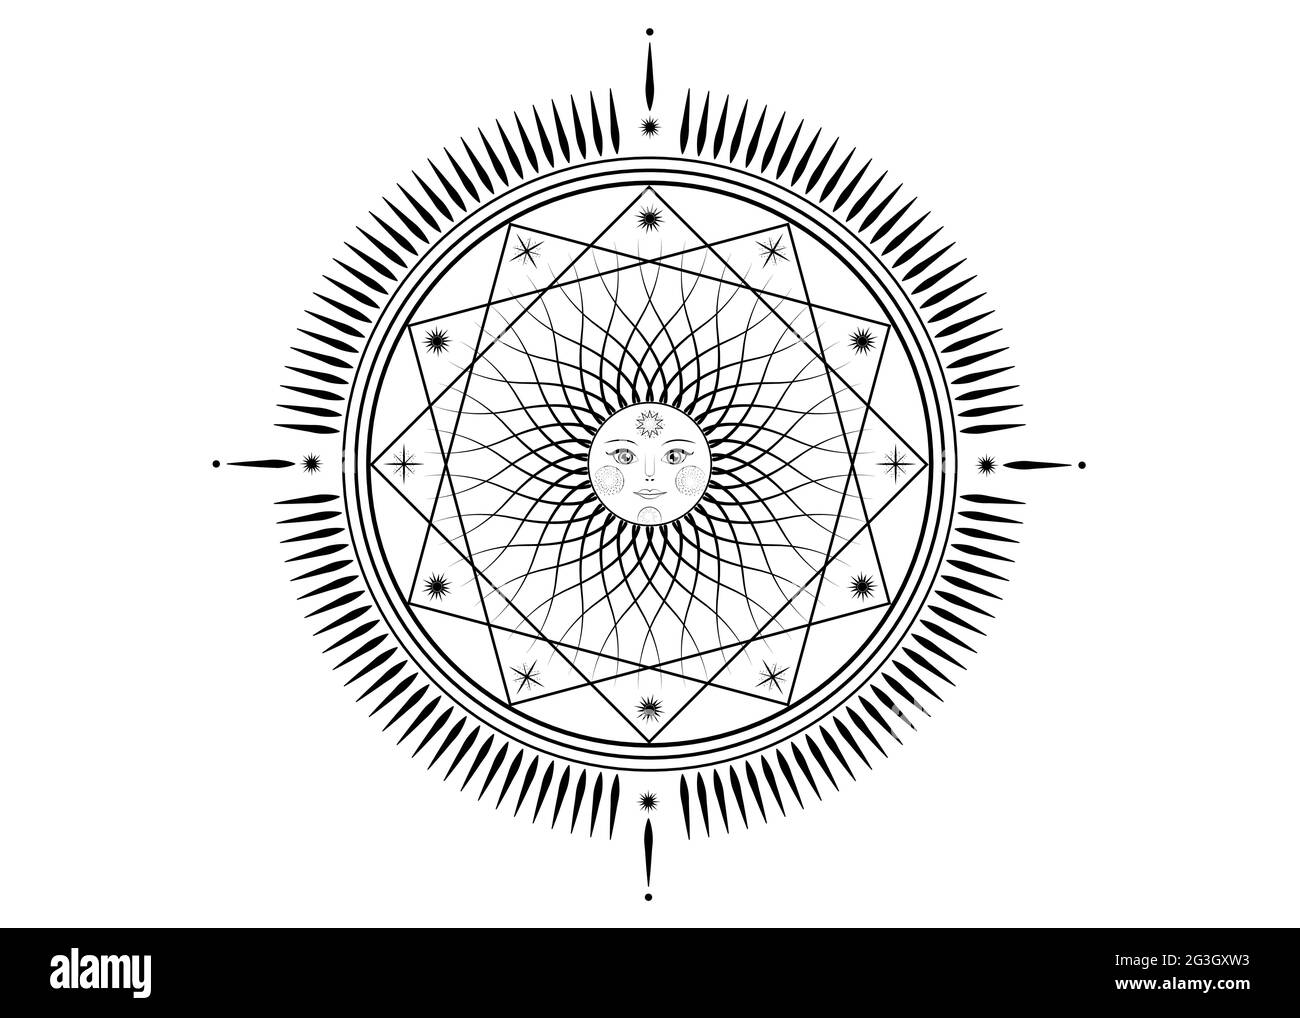 Skull Tattoo Mandala | Geometric Art Art Print by Freeverse Creations |  Society6